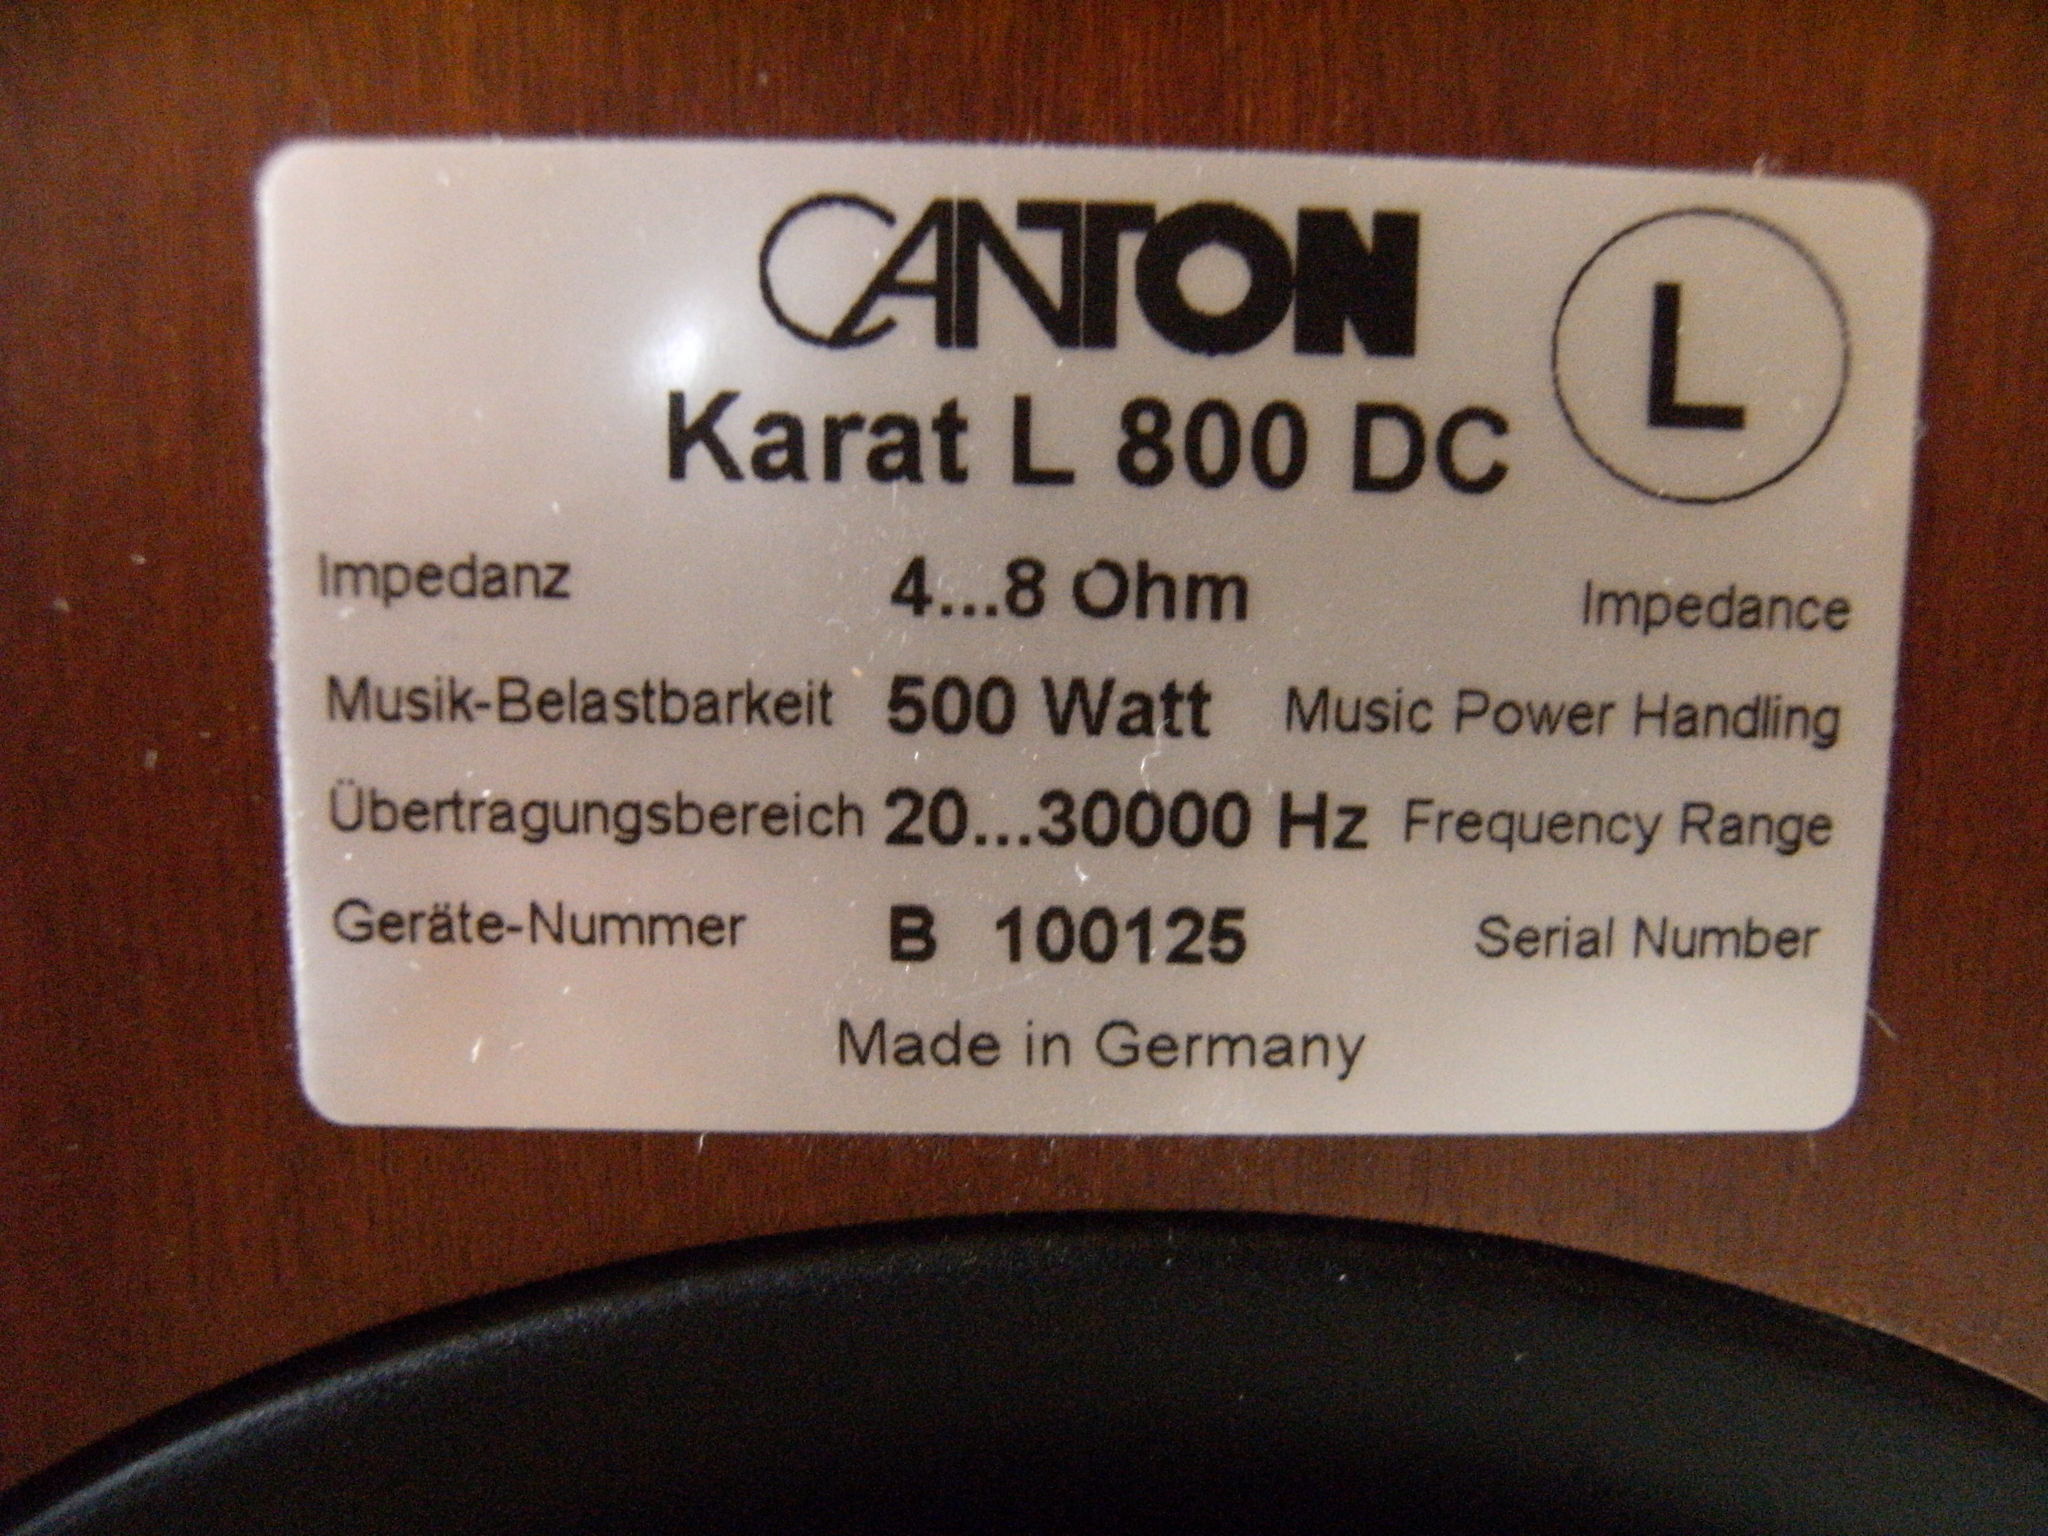 CANTON KARAT L 800 DC in CHERRY FINISH. 5